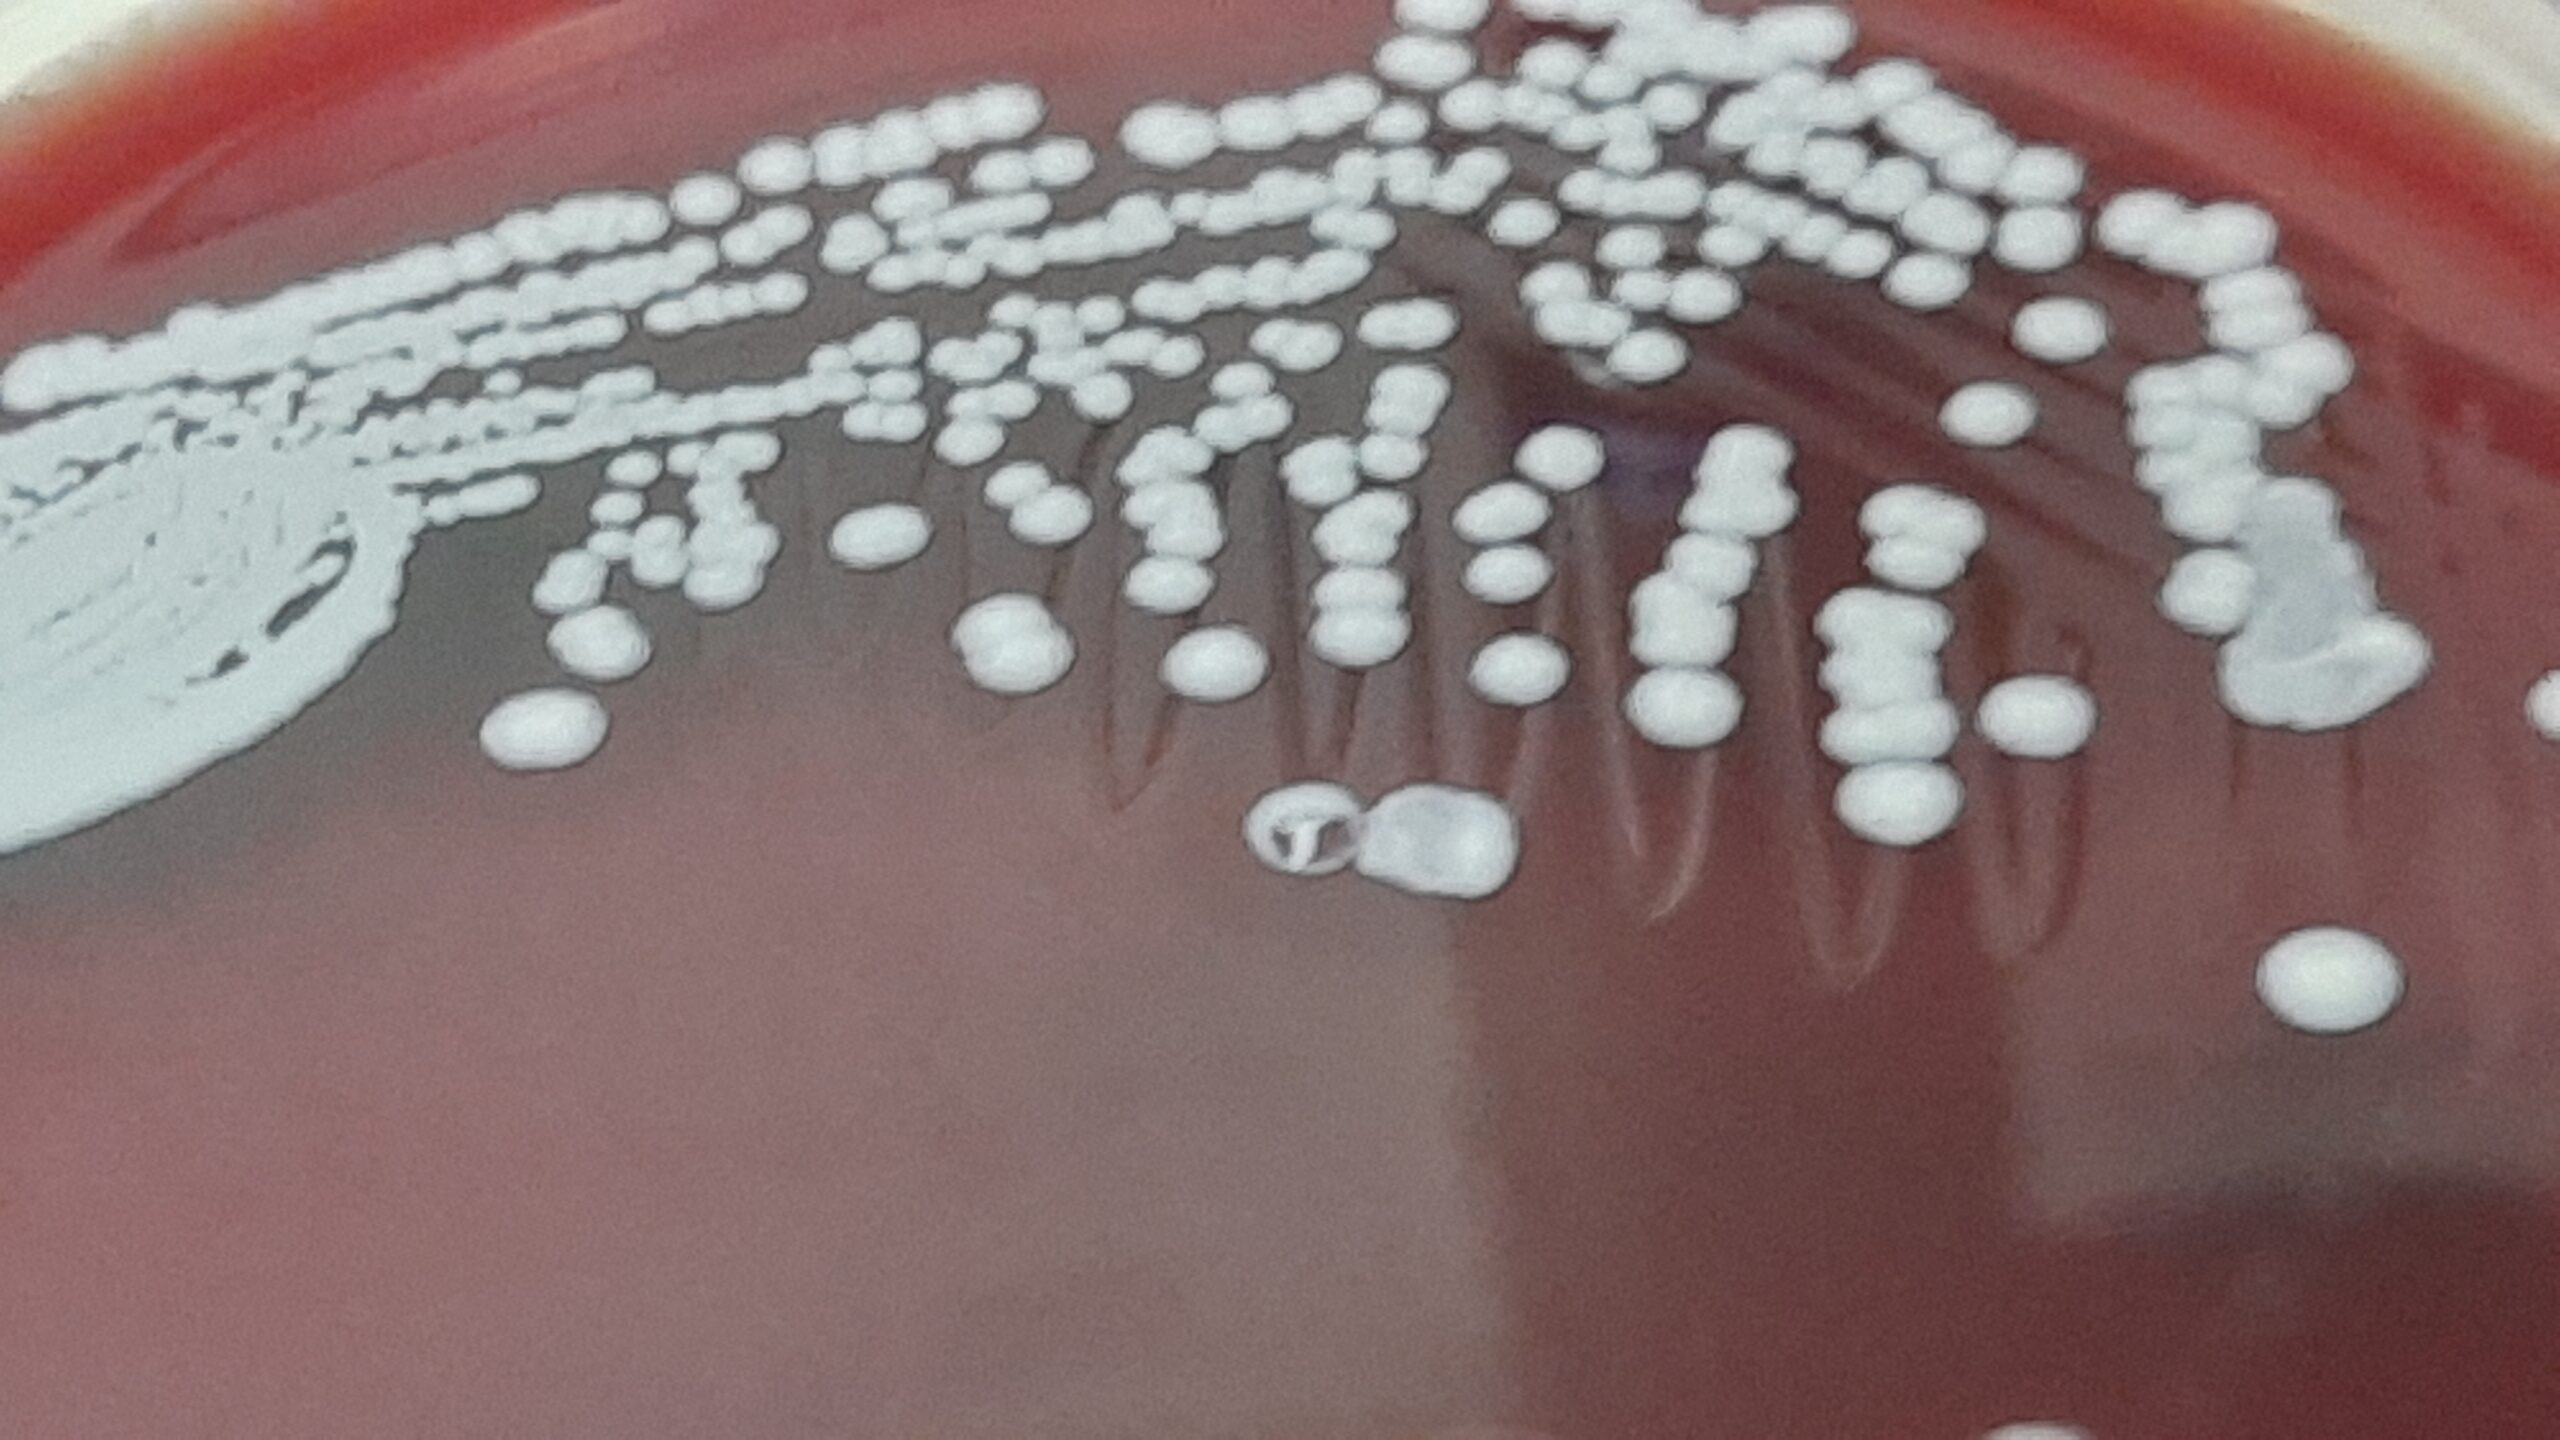 Staphylococcus epidermidis Colony Characteristics on Blood agar